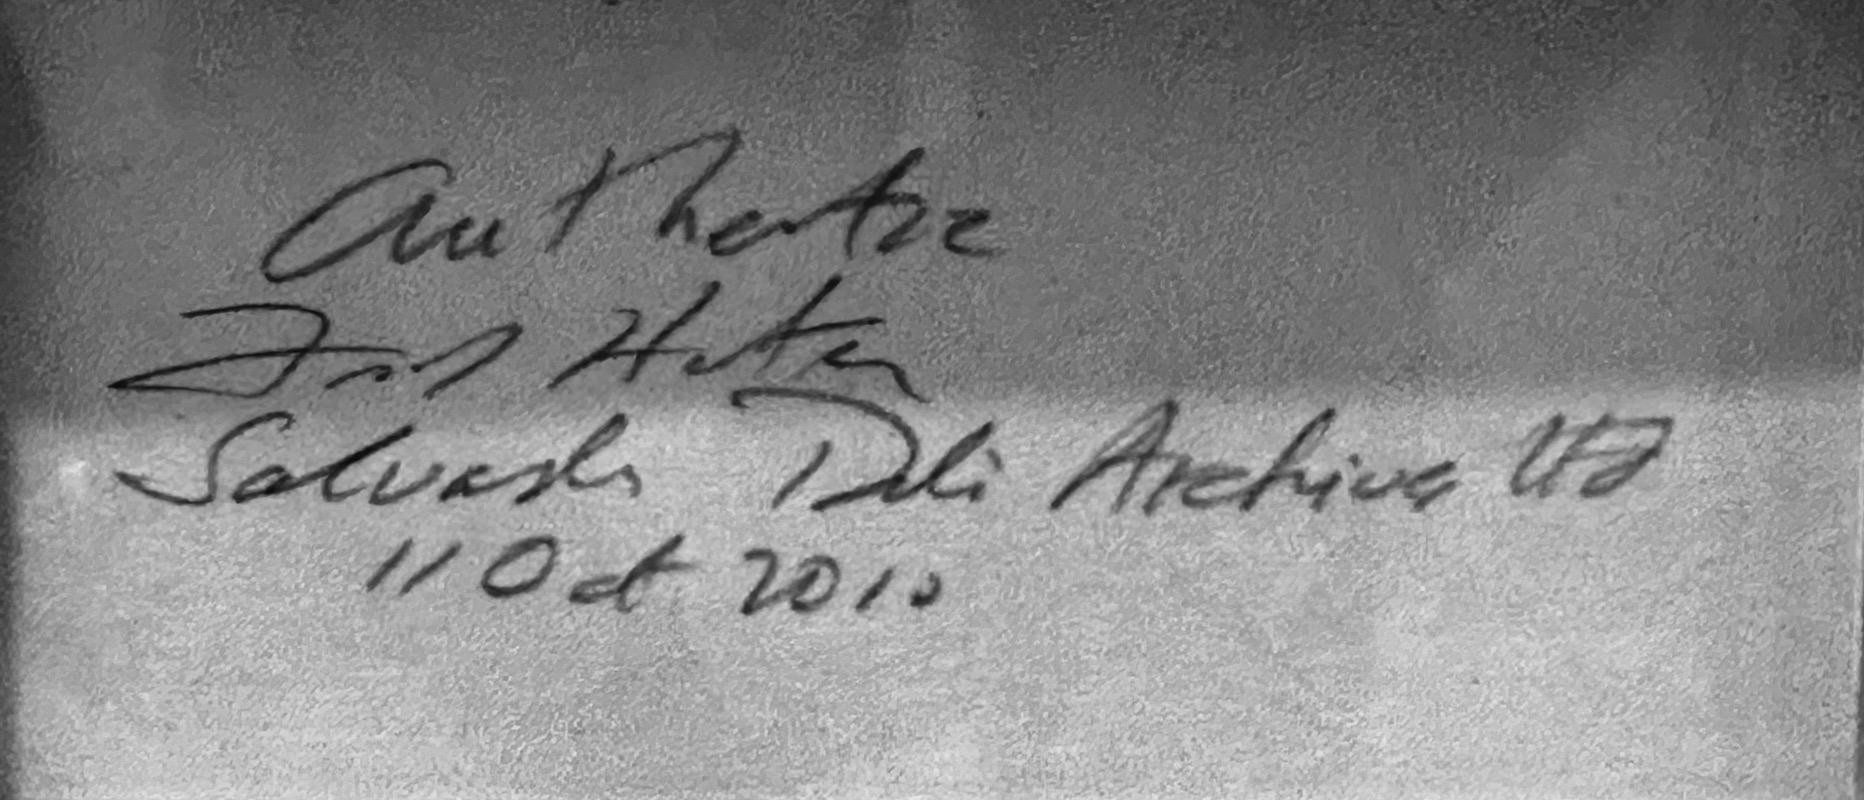 ARTIST: Salvador Dali

TITLE: The Magicians Vanite

MEDIUM: Etching

SIGNED: Hand Signed 

PUBLISHER: Editions Argillet, Paris

EDITION NUMBER: 33/100

MEASUREMENTS: Paper: 11.2